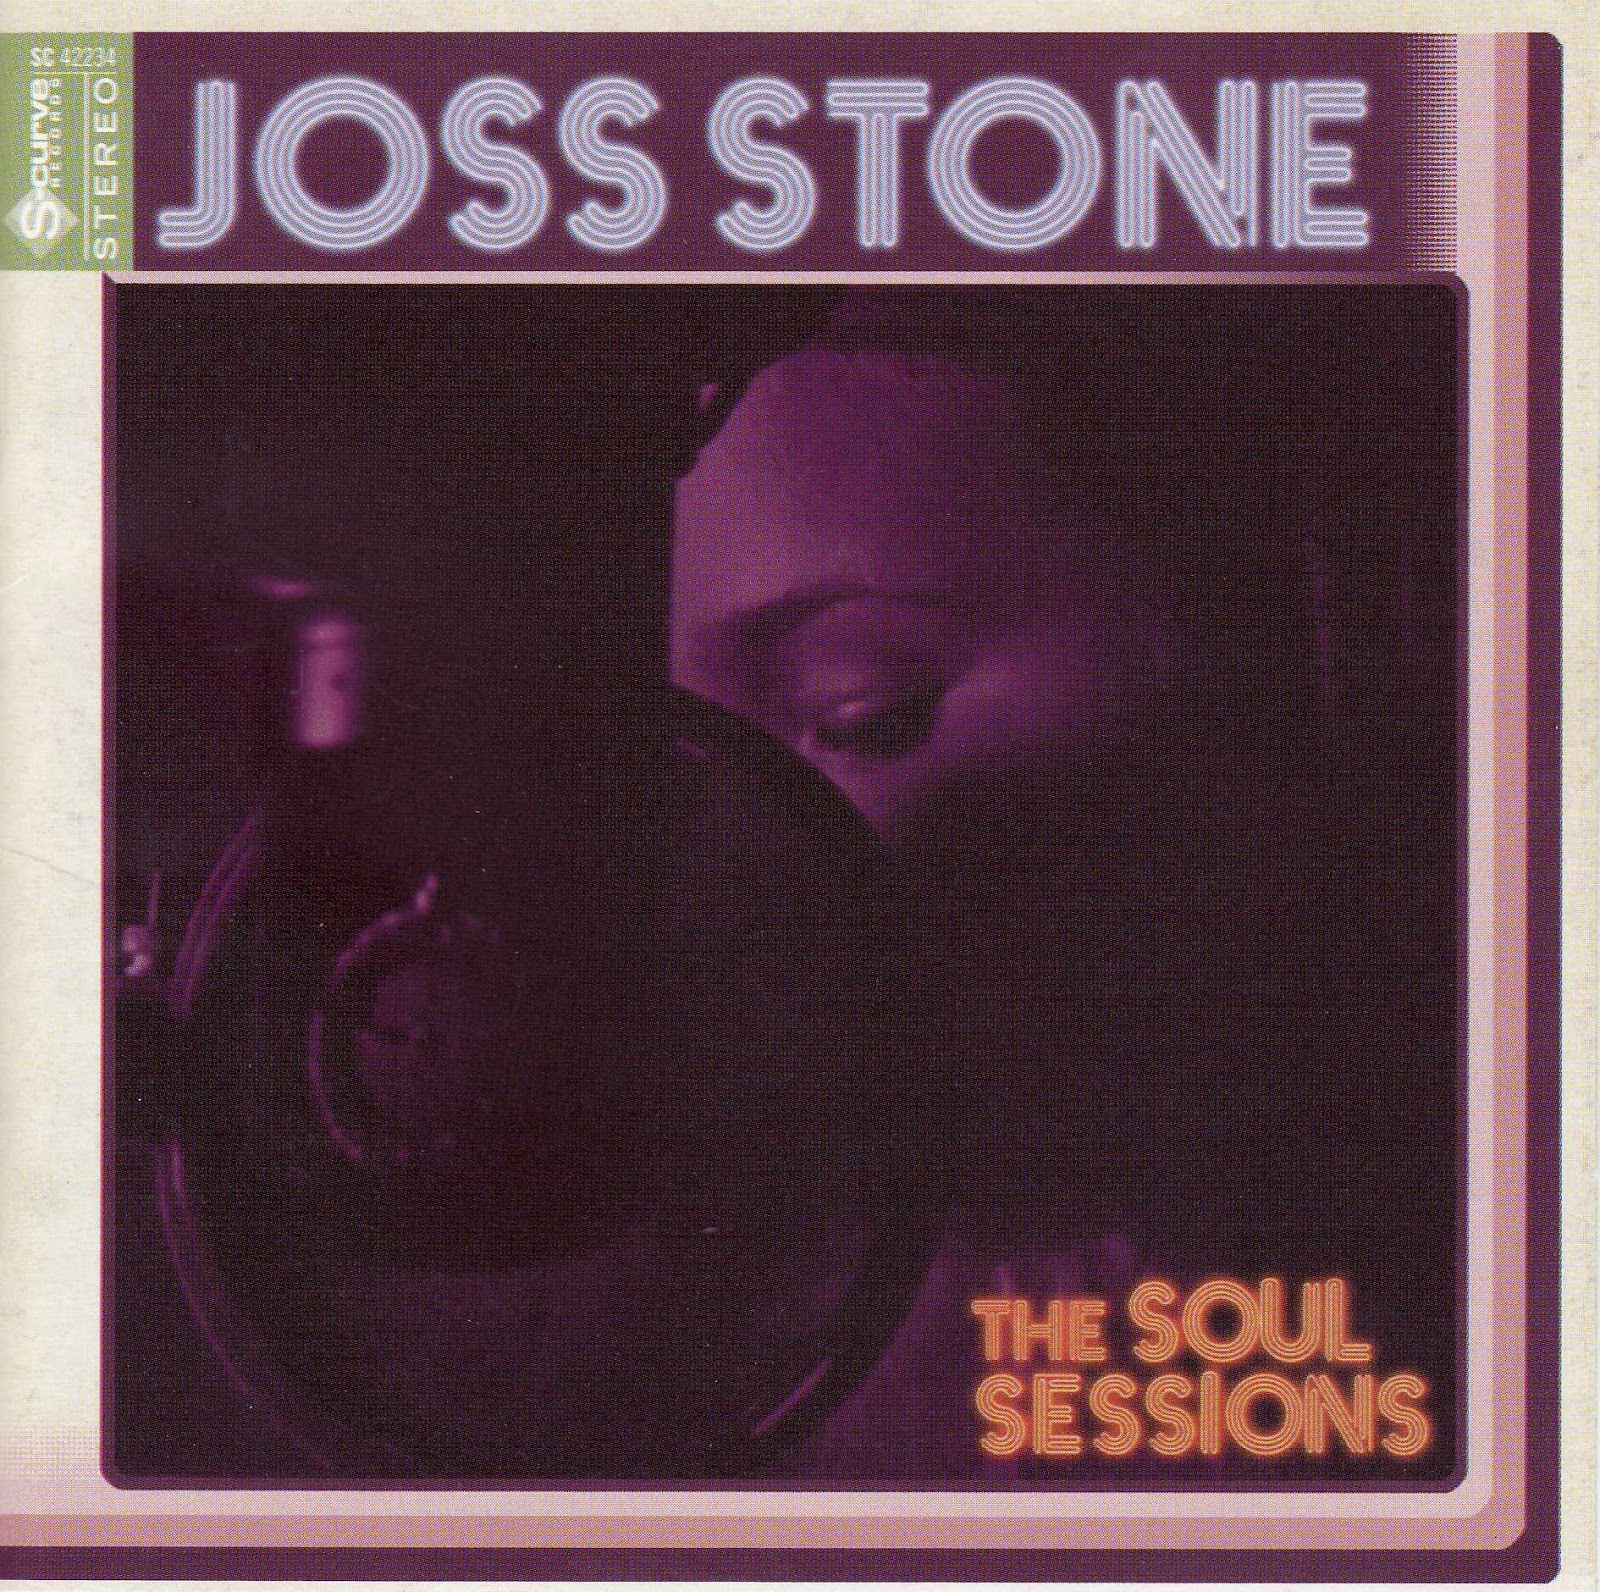 http://1.bp.blogspot.com/-RC5-ZLkOOro/UFMML0LbukI/AAAAAAAAWng/Jp_oHF5Wdns/s1600/joss_stone_the_soul_sessions_2003_retail_cd-front.jpg